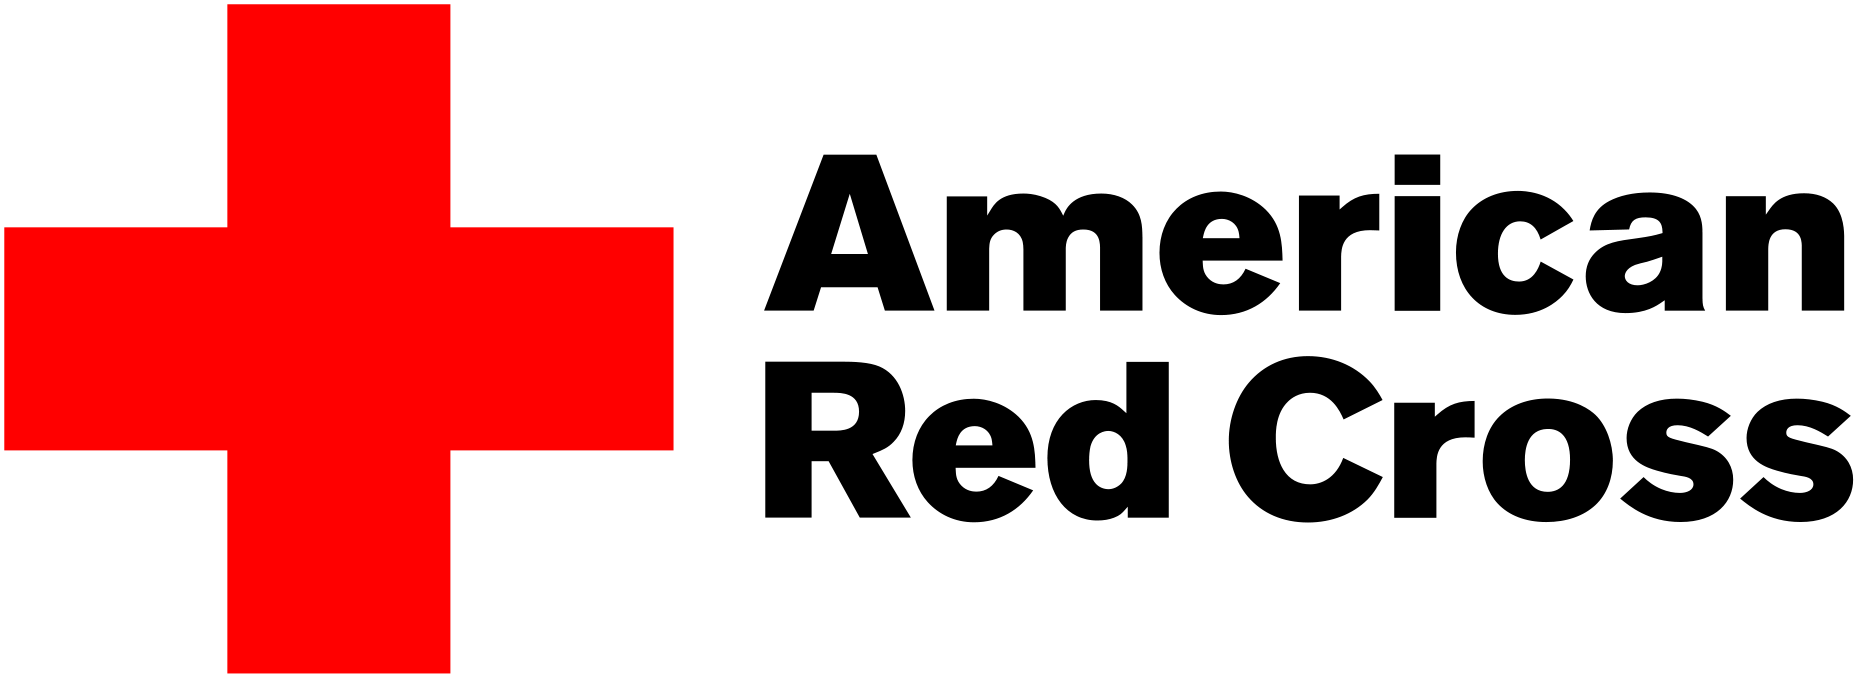 American-Red-Cross-Logo